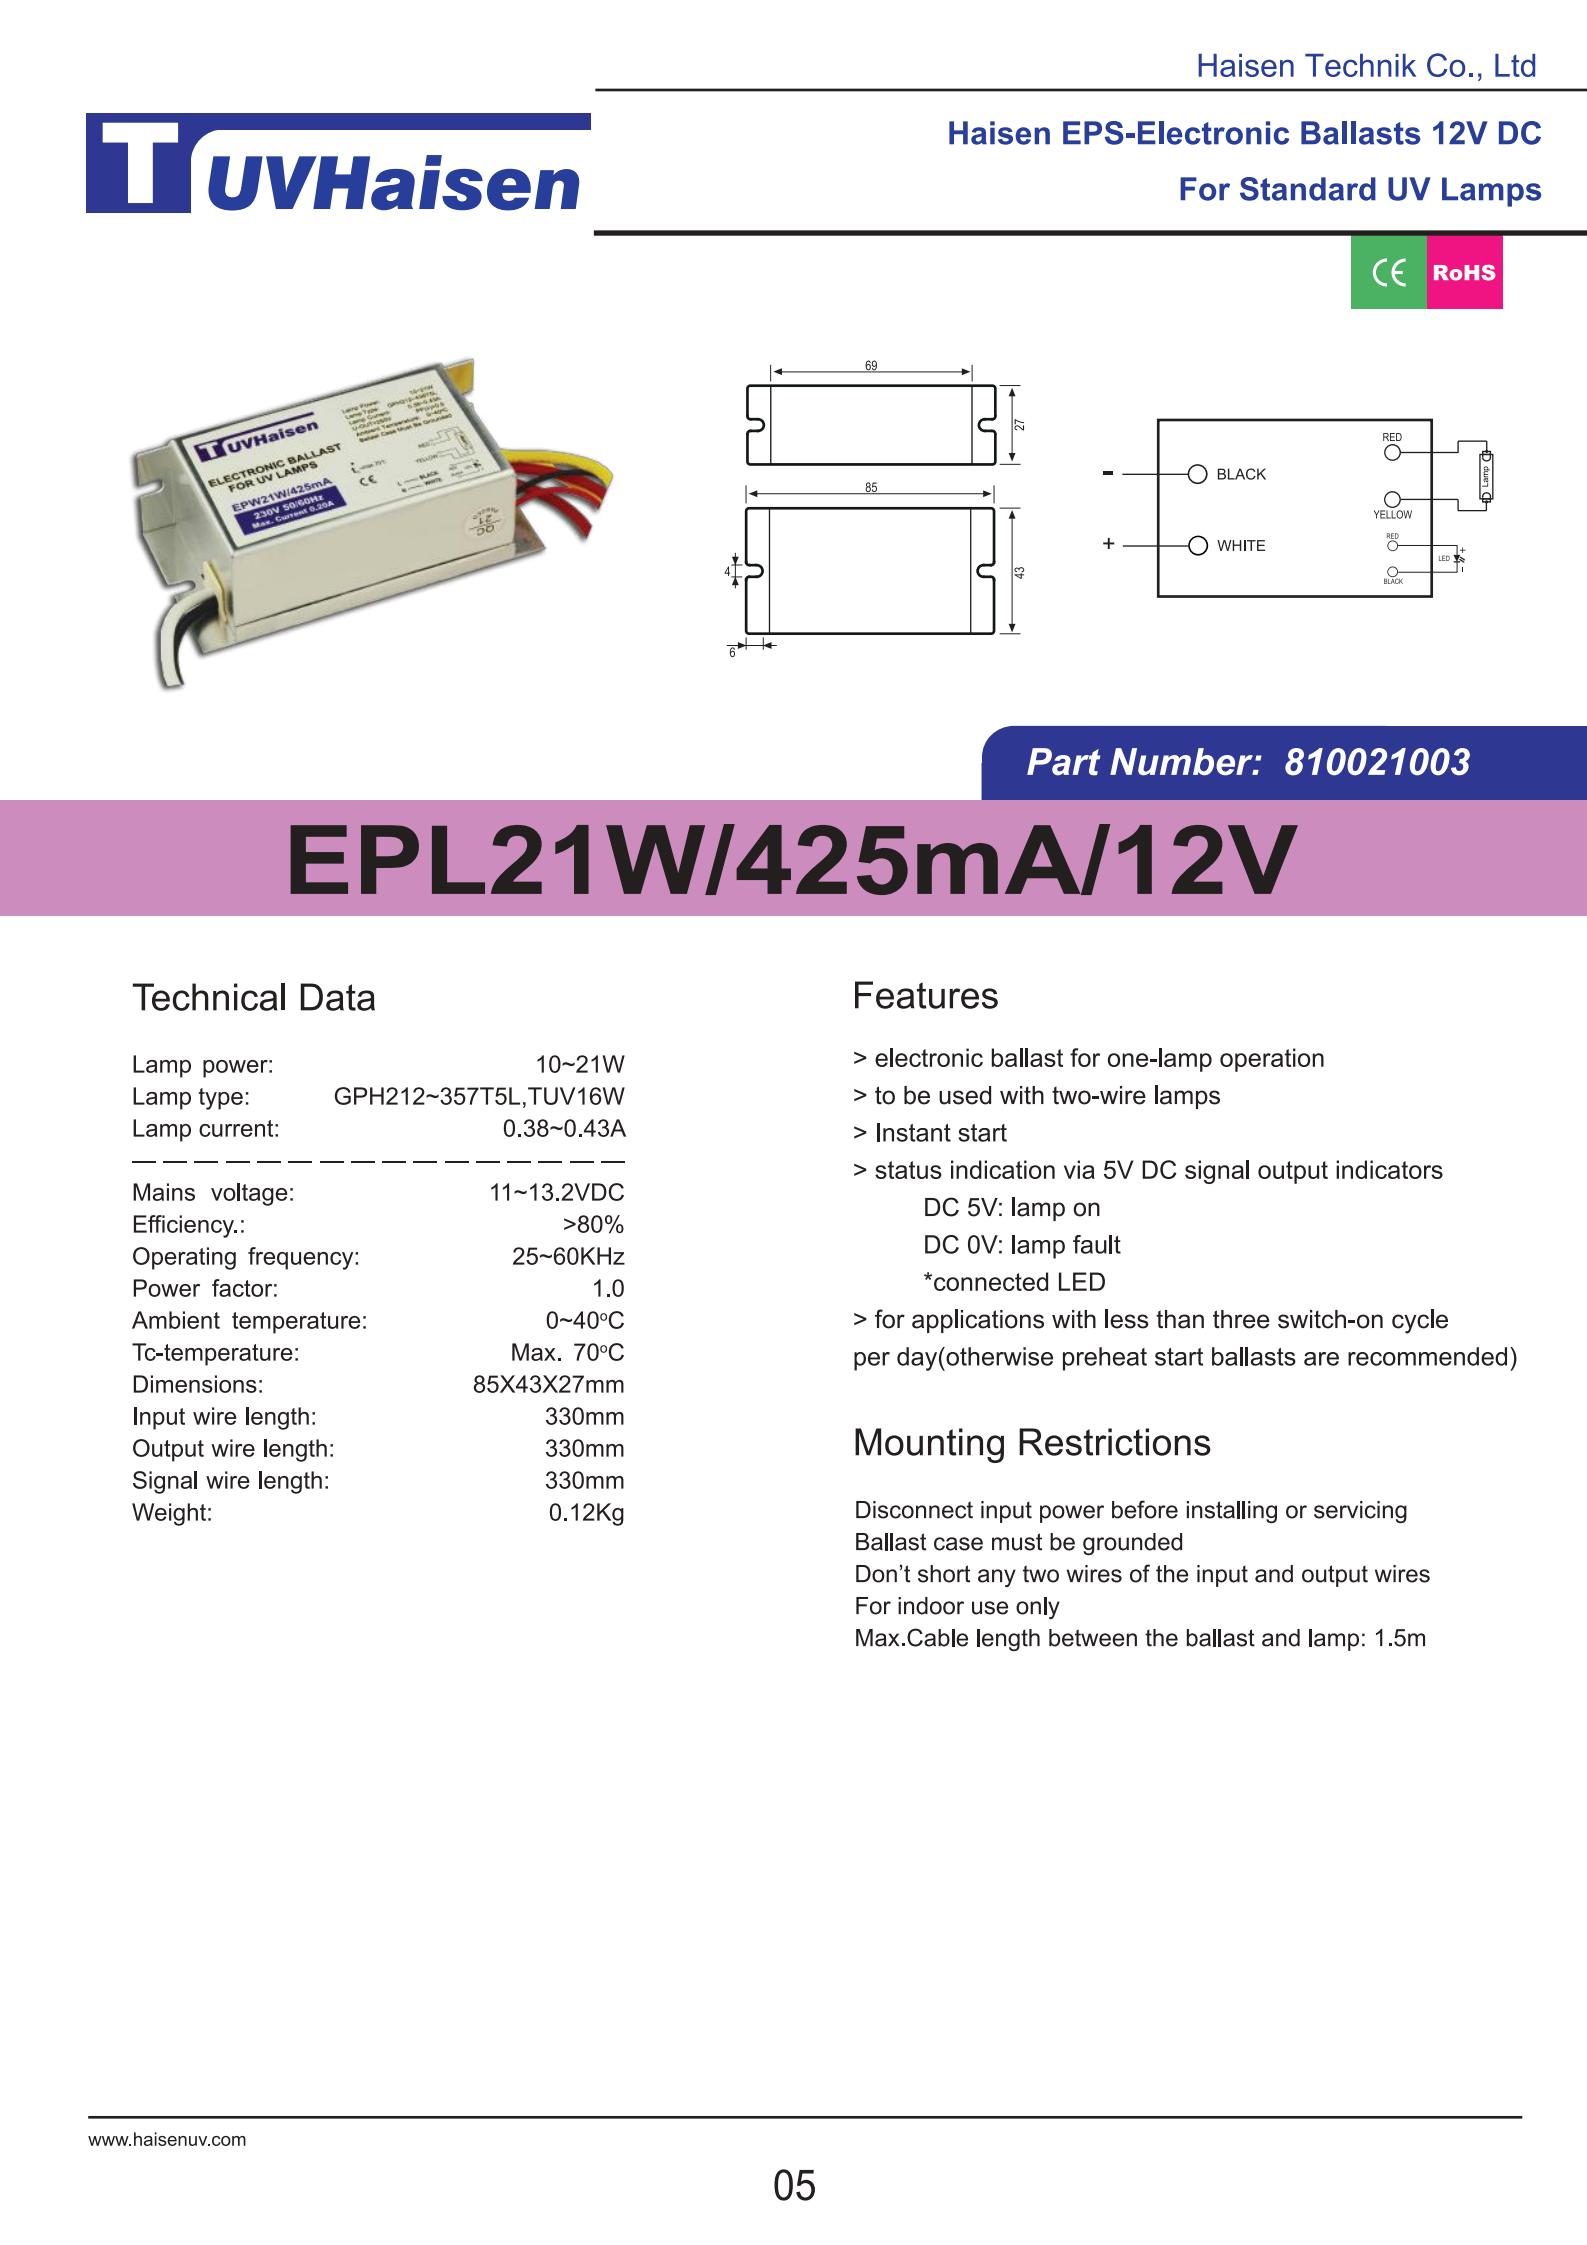  Ultraviolet Ballast EPW21W/425mA/12V for uv light